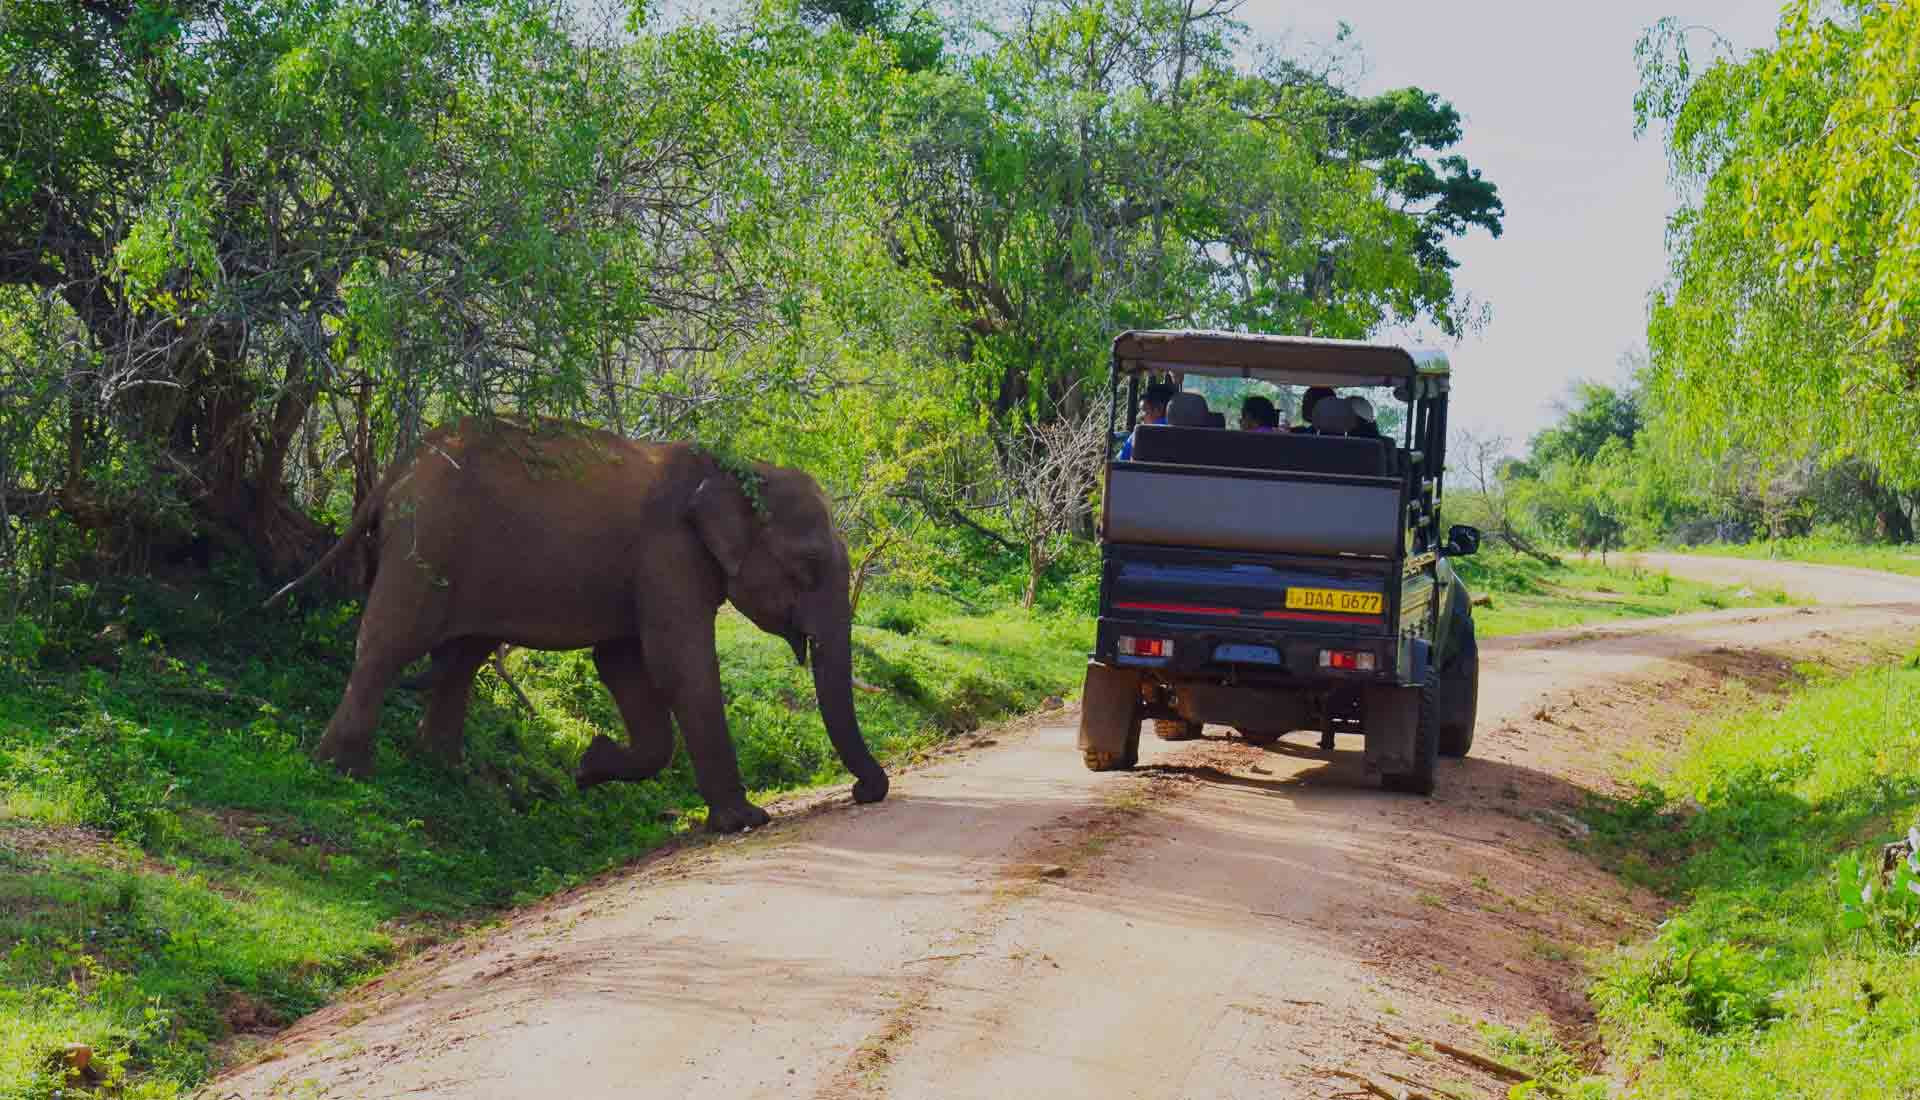 yala safari experience